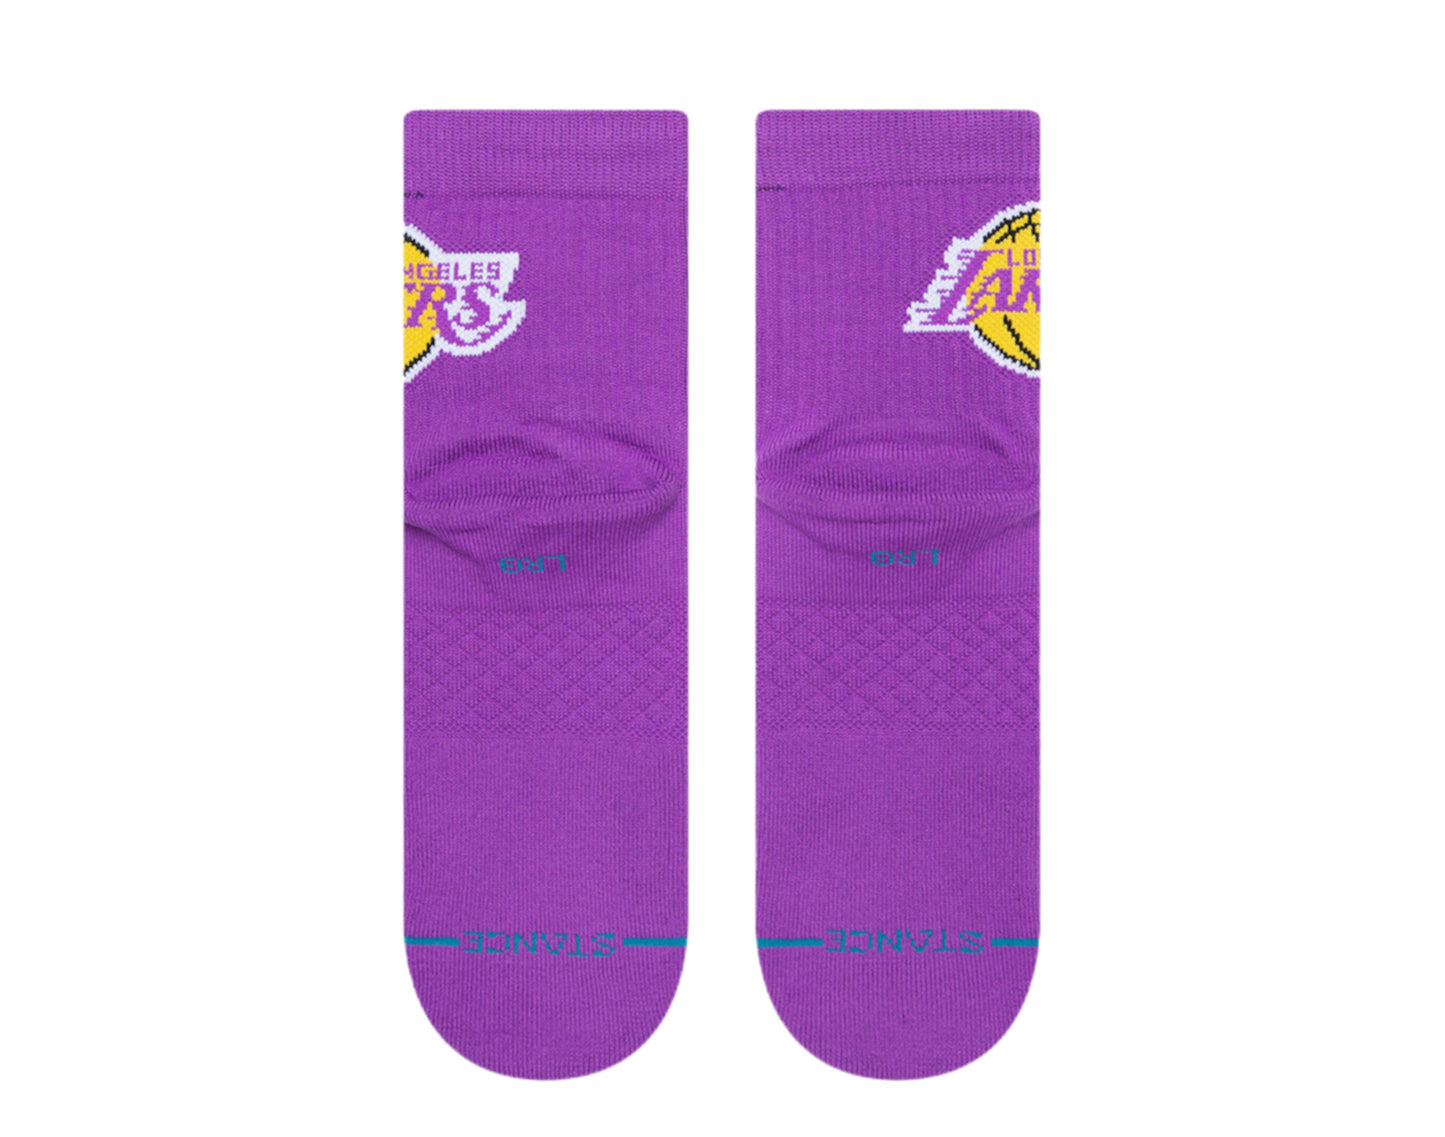 Stance x NBA Los Angeles Lakers Quarter Ankle Socks